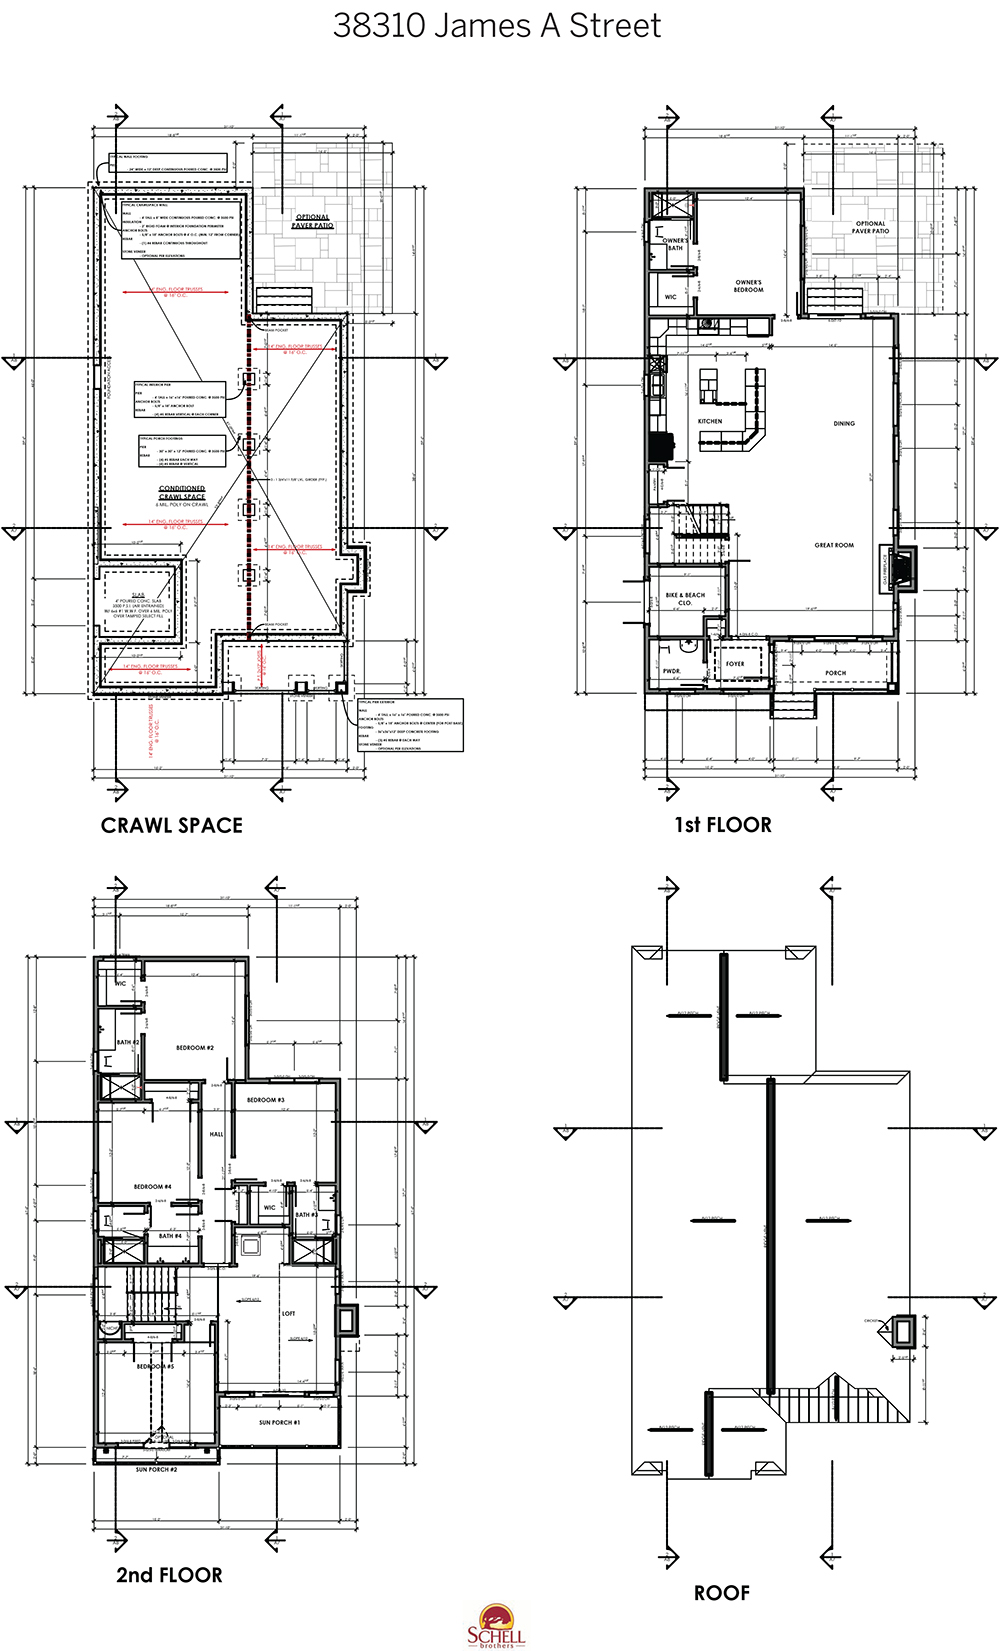 38310 James A Street floor plans